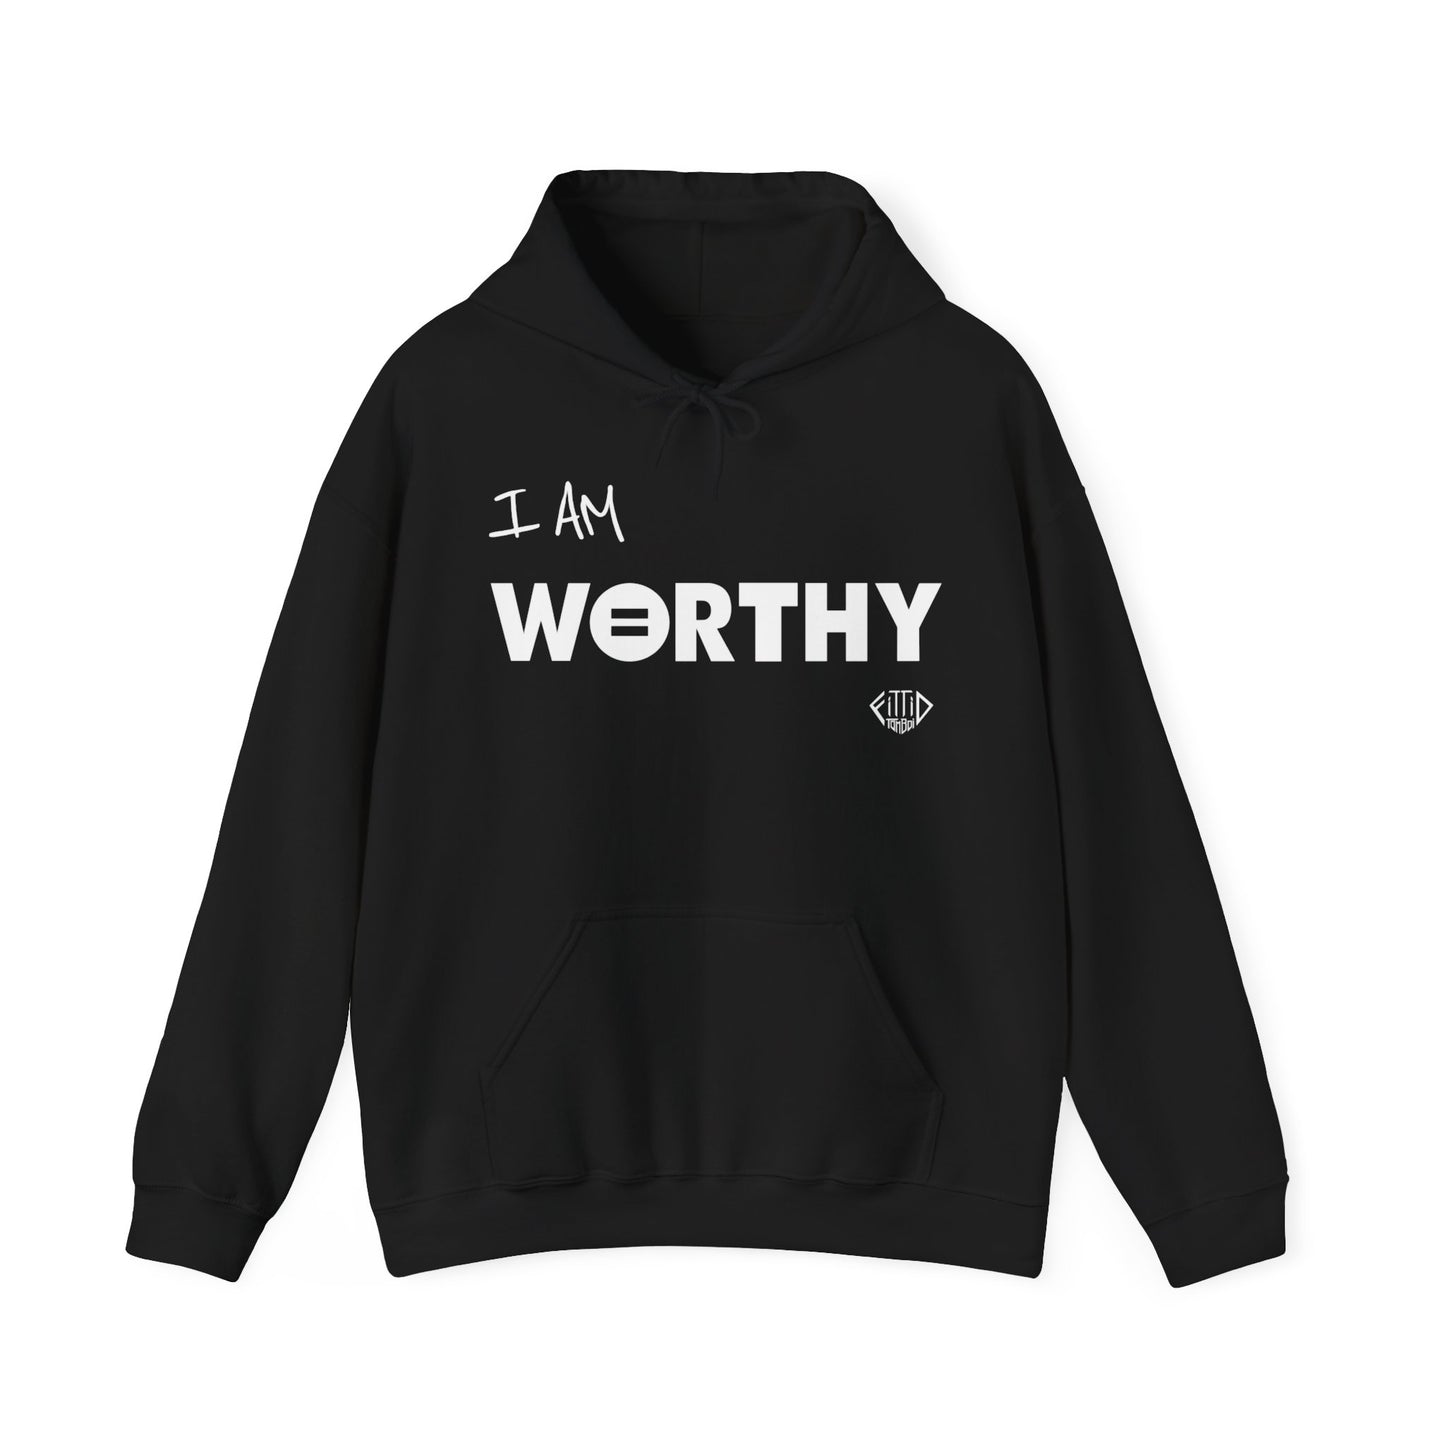 I AM WORTHY Hooded Sweatshirt